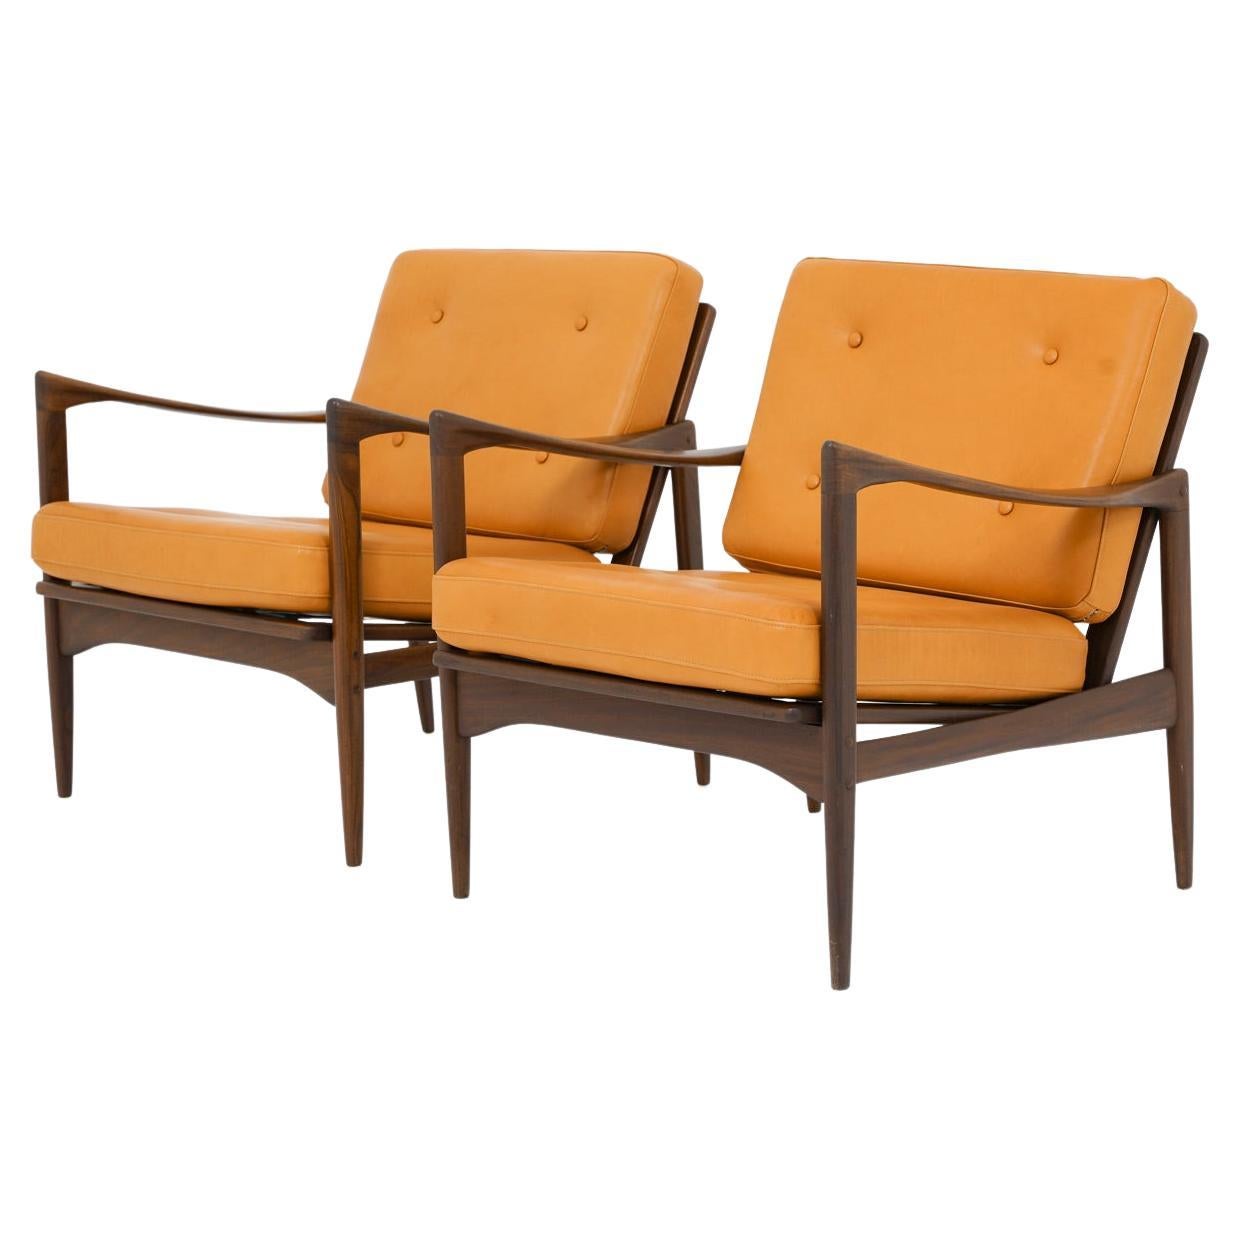 Midcentury Scandinavian Lounge Chairs "Kandidaten" by Ib Kofod Larsen